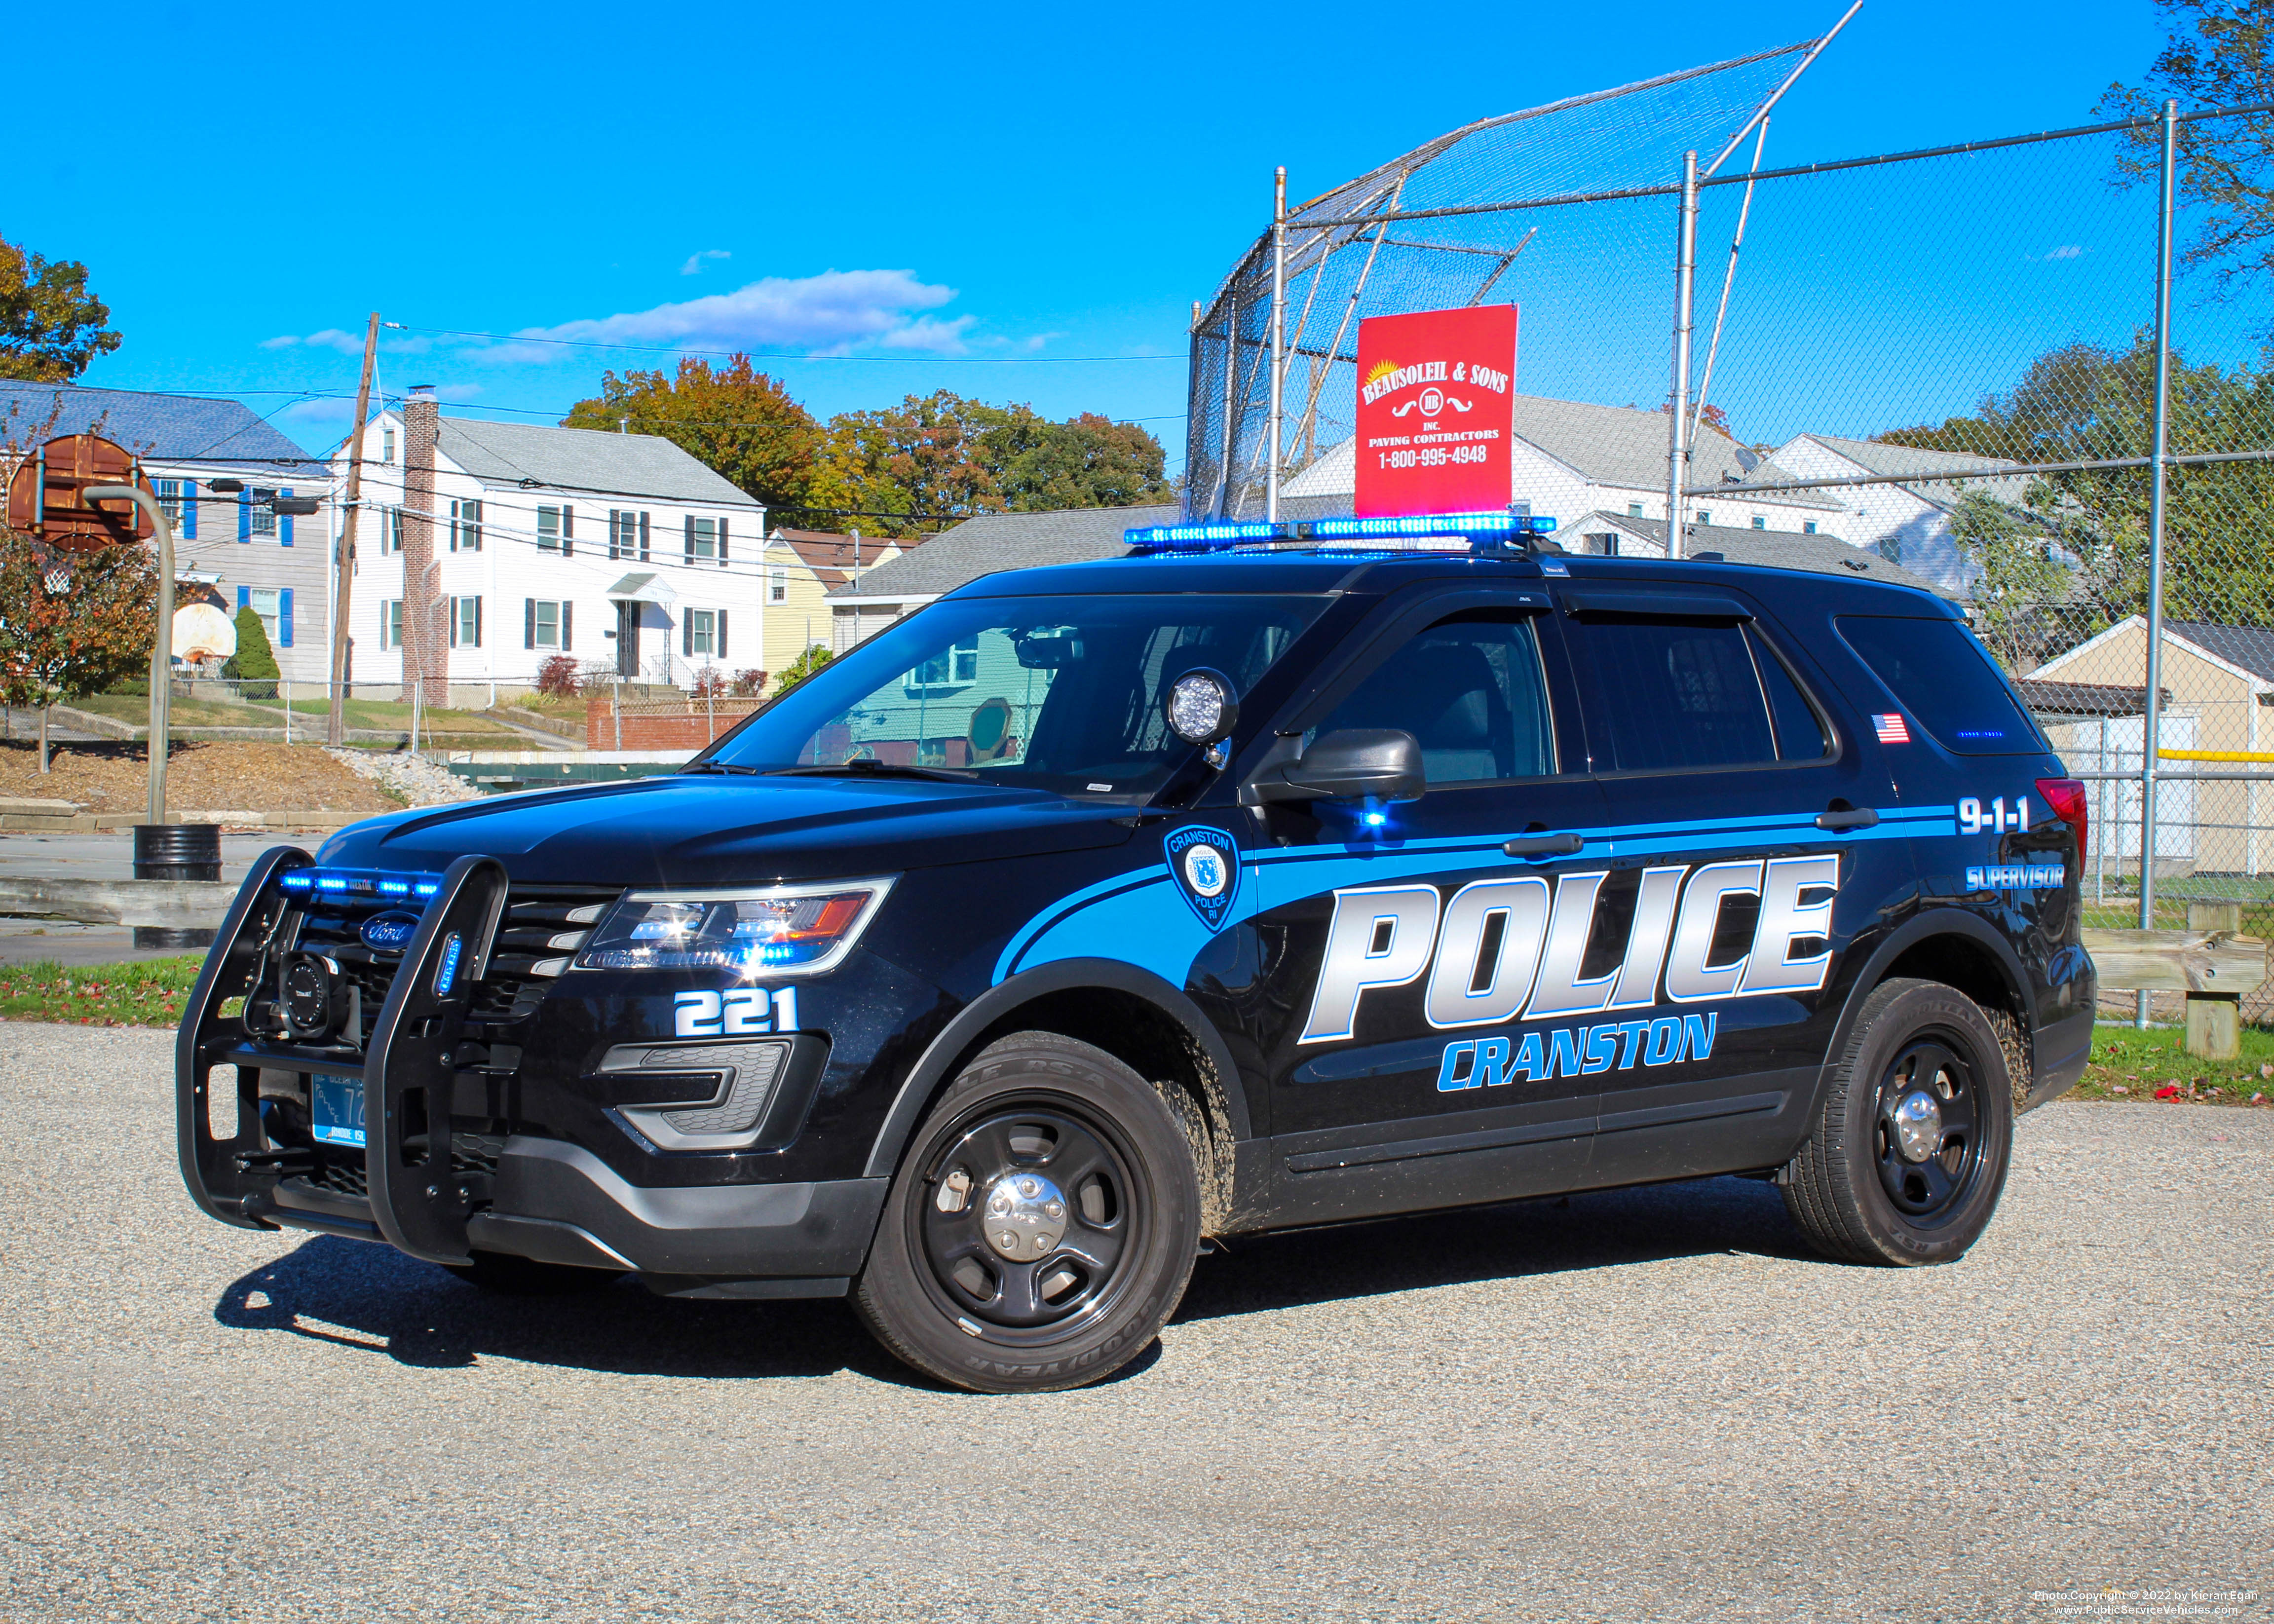 A photo  of Cranston Police
            Cruiser 221, a 2019 Ford Police Interceptor Utility             taken by Kieran Egan